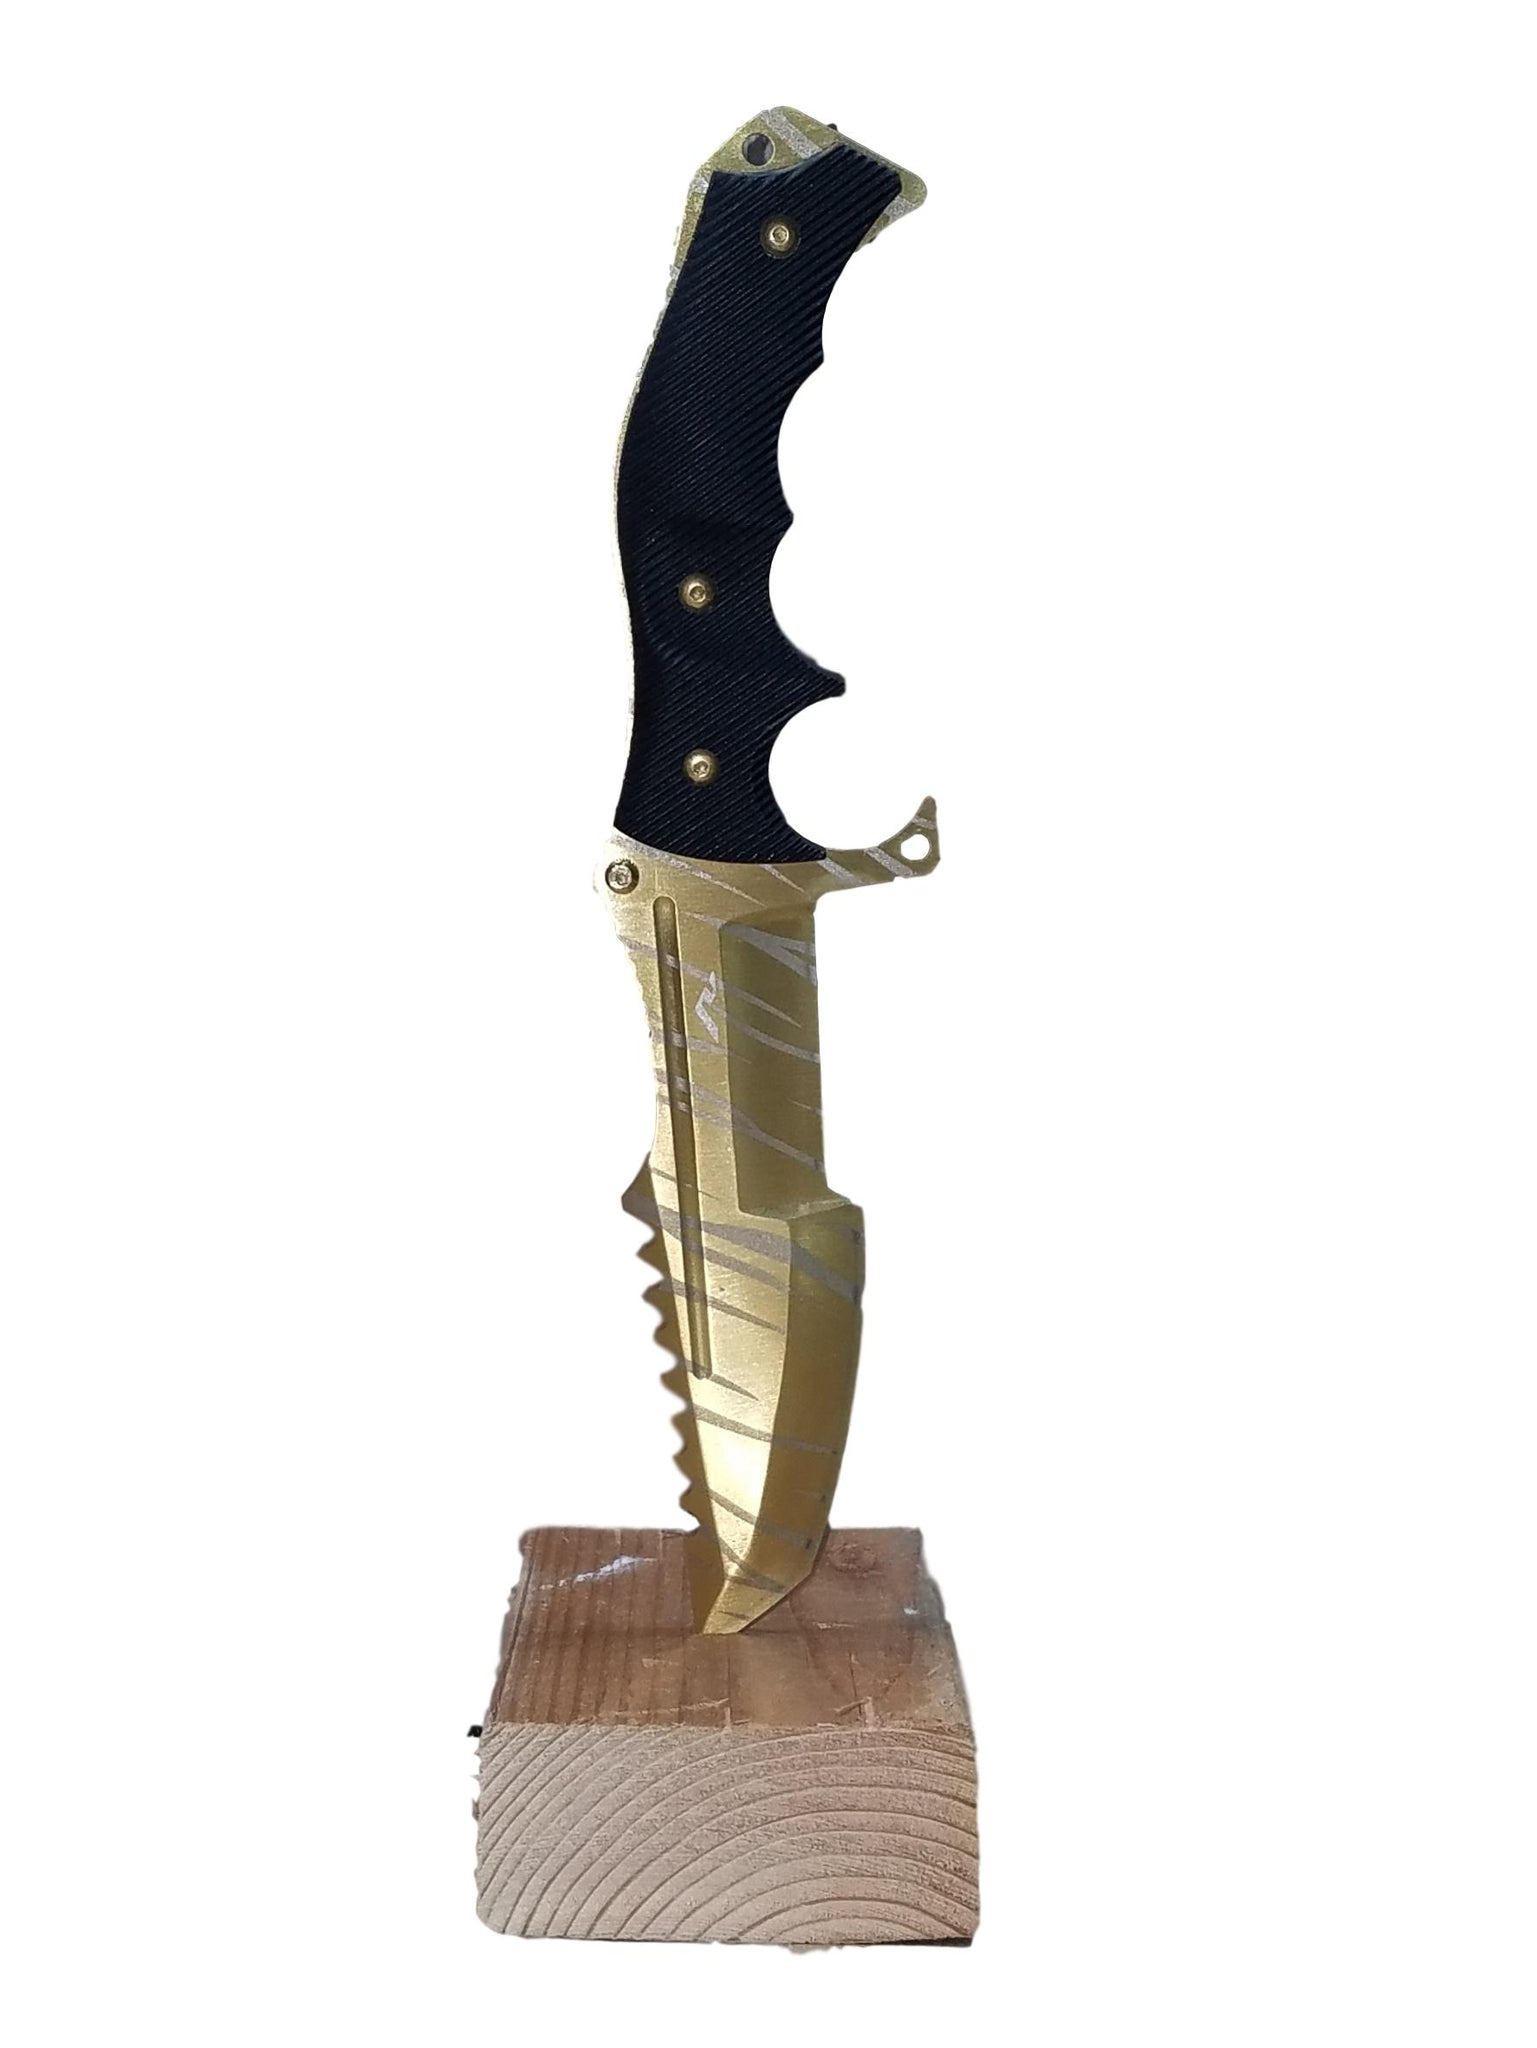 gold dragon spring assisted karambit knife